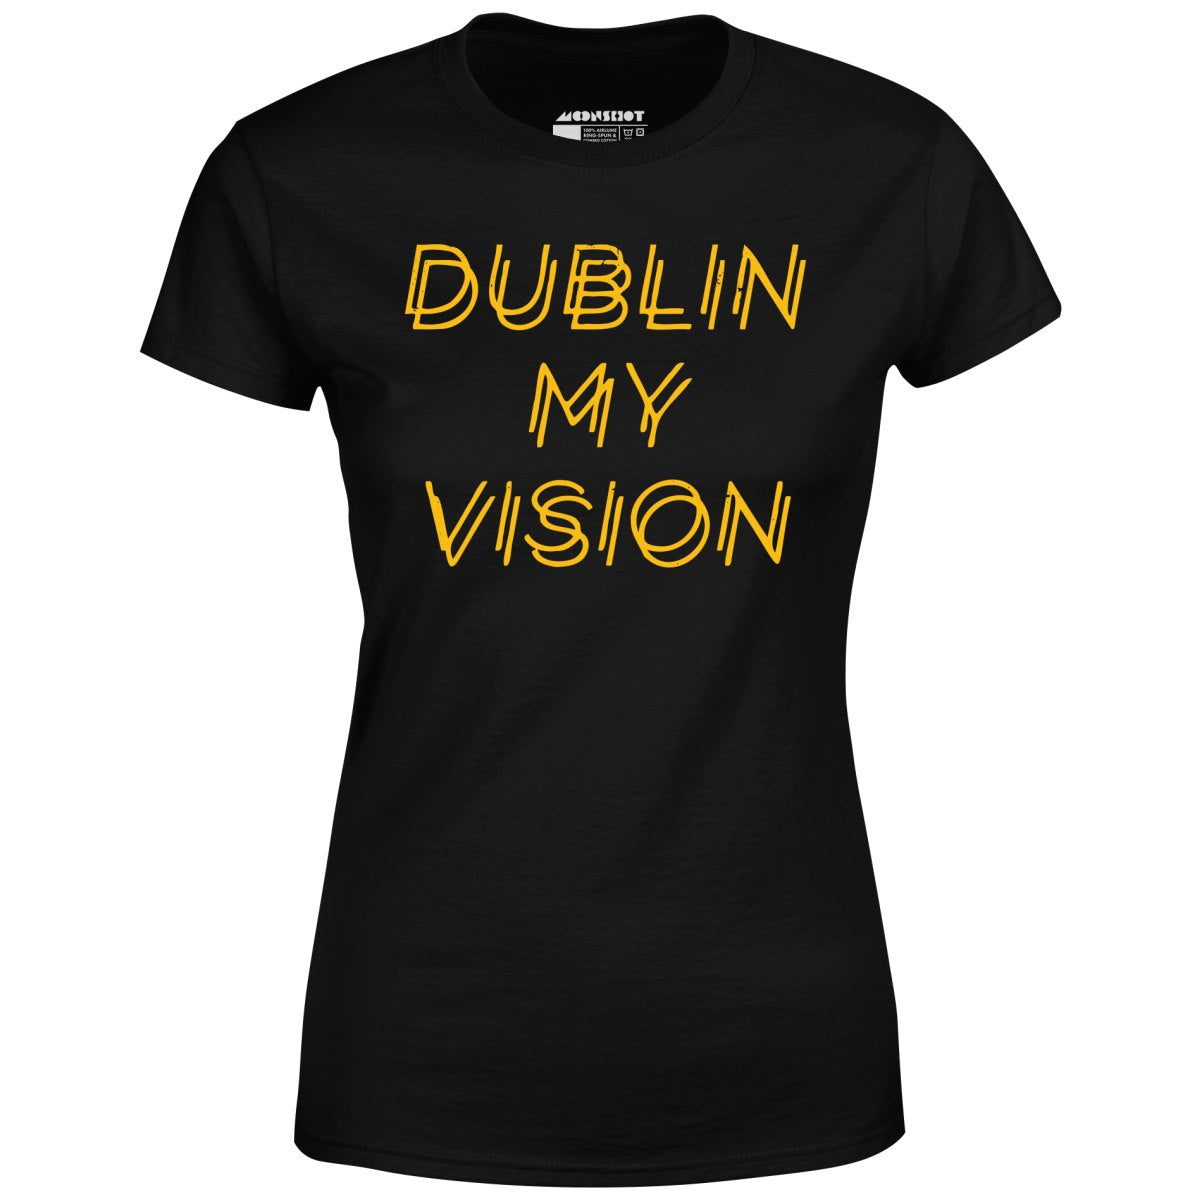 Dublin My Vision - Women's T-Shirt